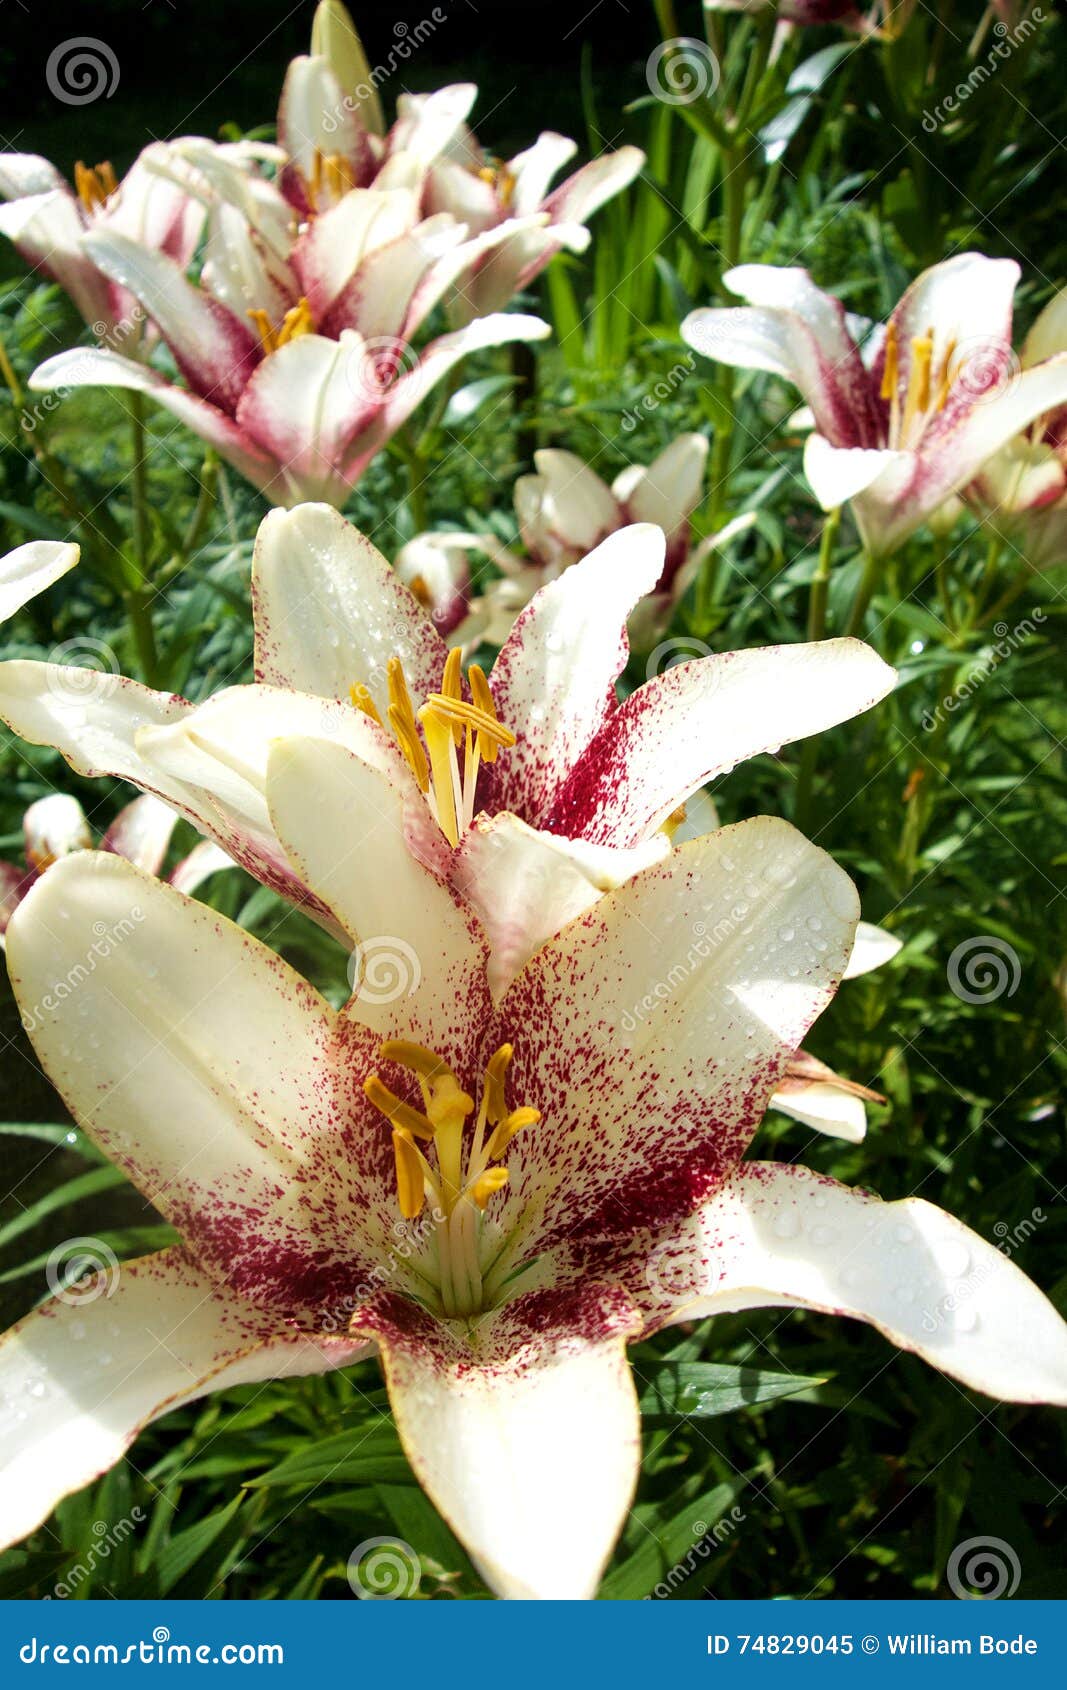 Stargazer lily white Lilium 'Stargazer'